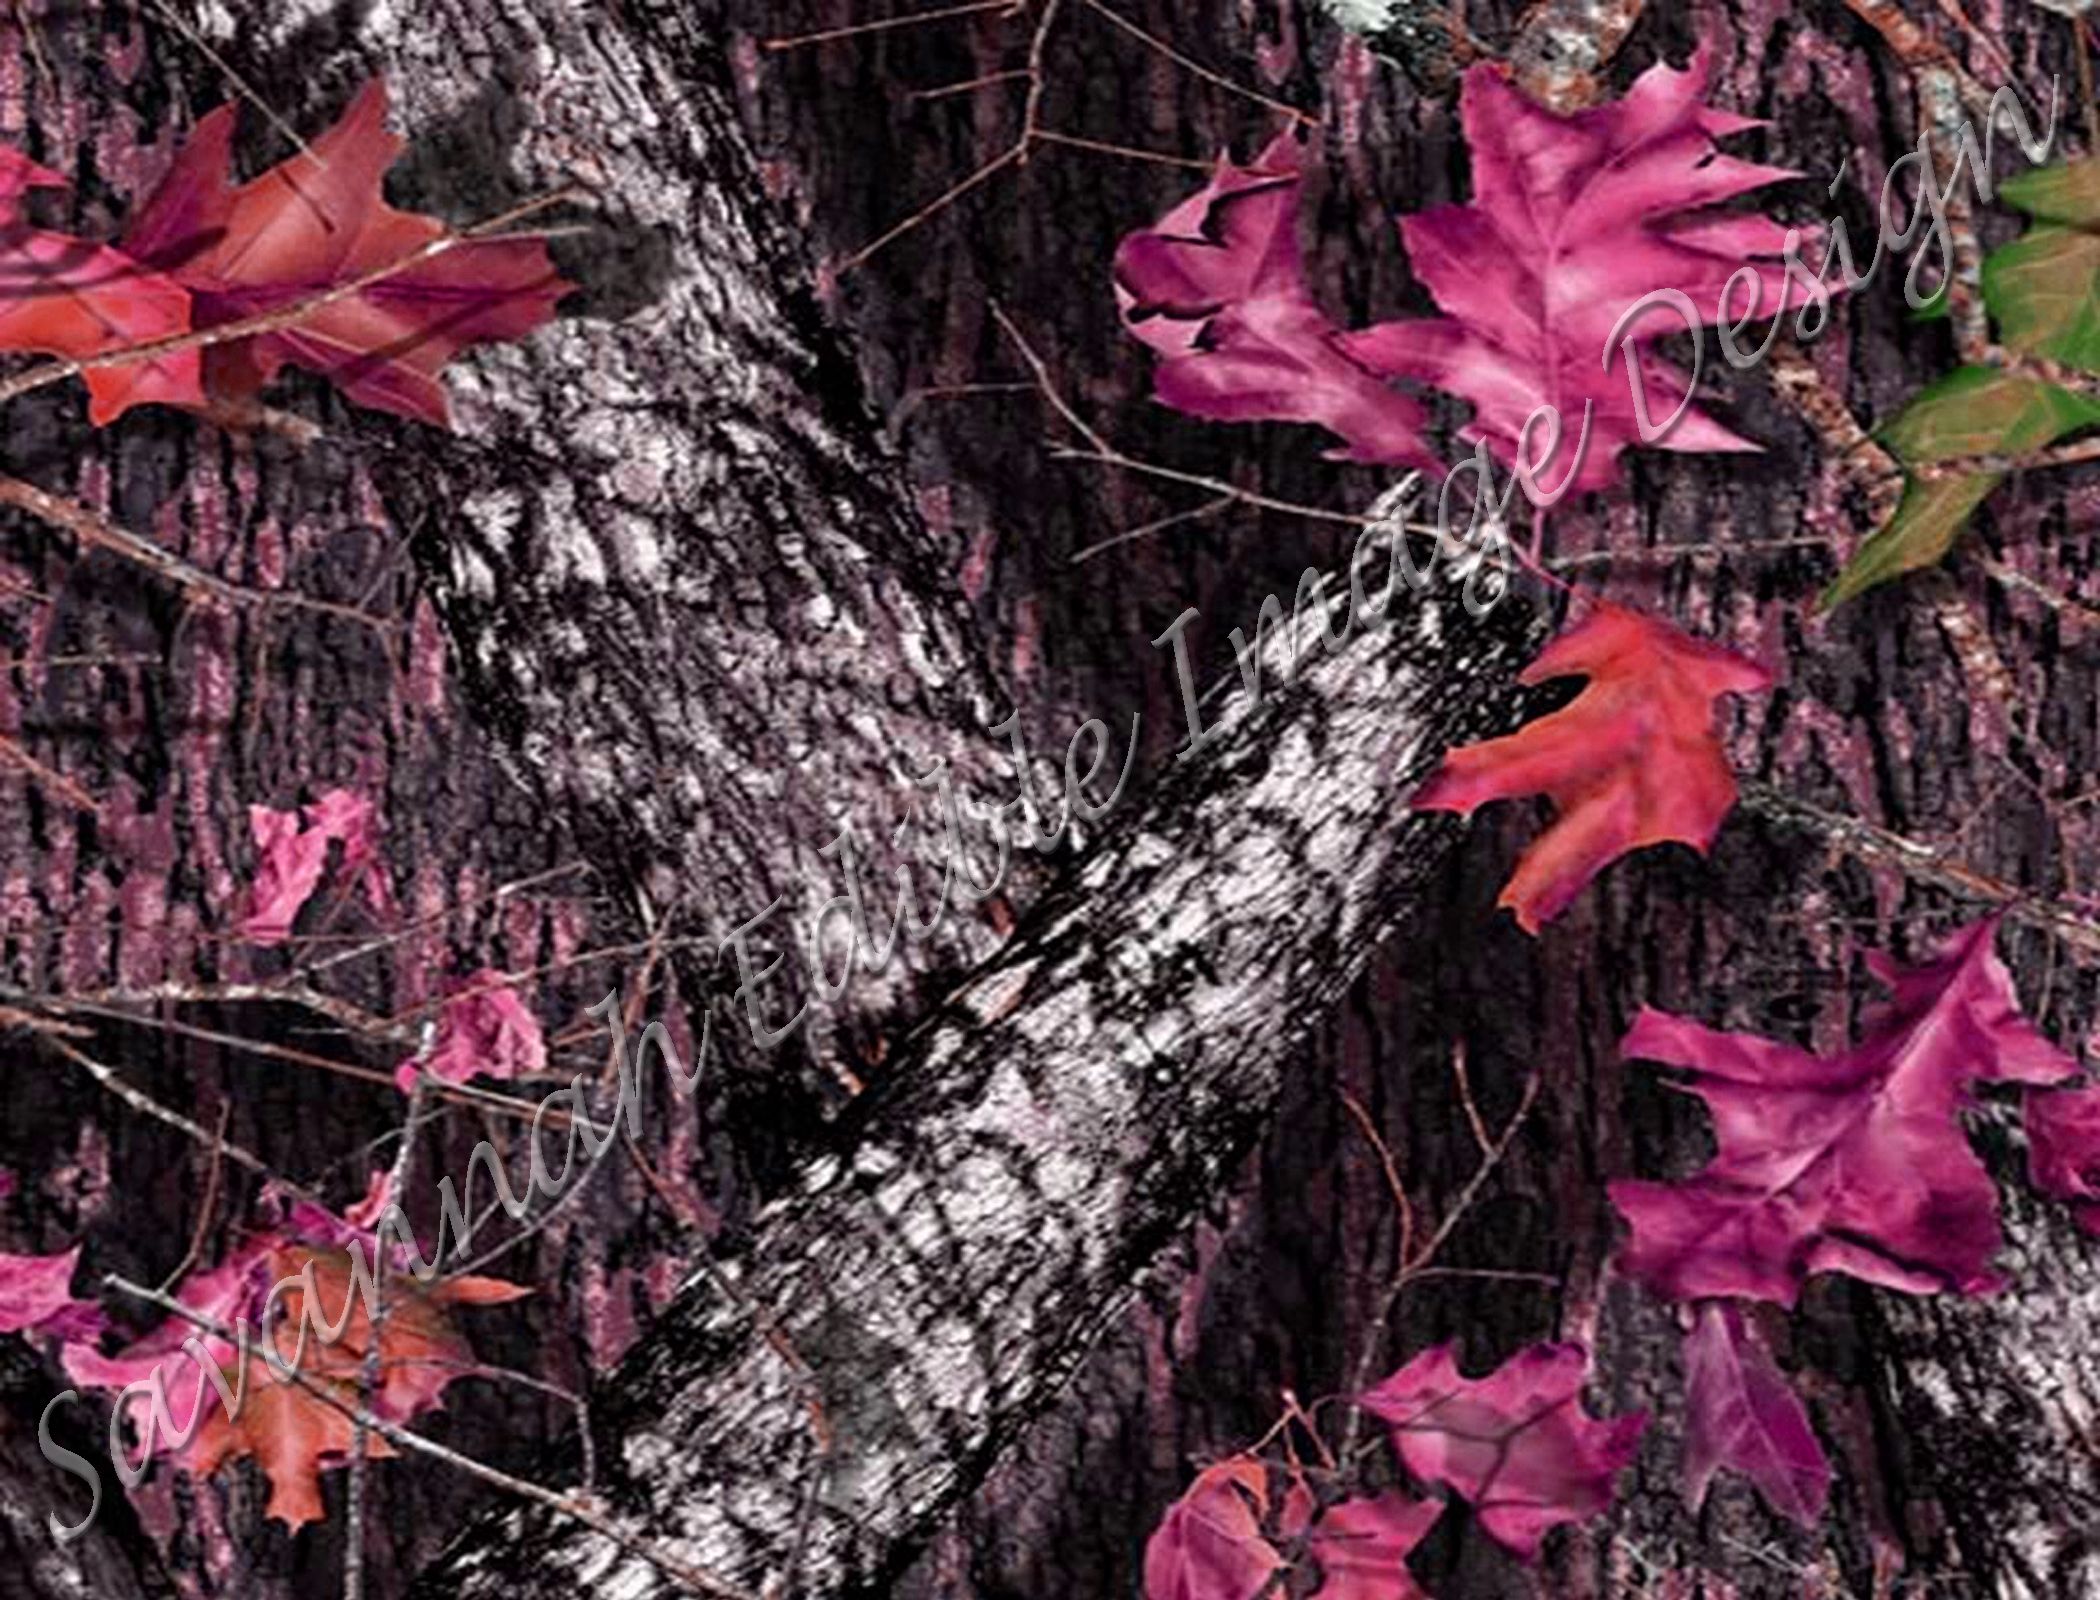 Mossy Oak iPhone Background. iPhone Wallpaper, Beautiful iPhone Wallpaper and Awesome iPhone Wallpaper